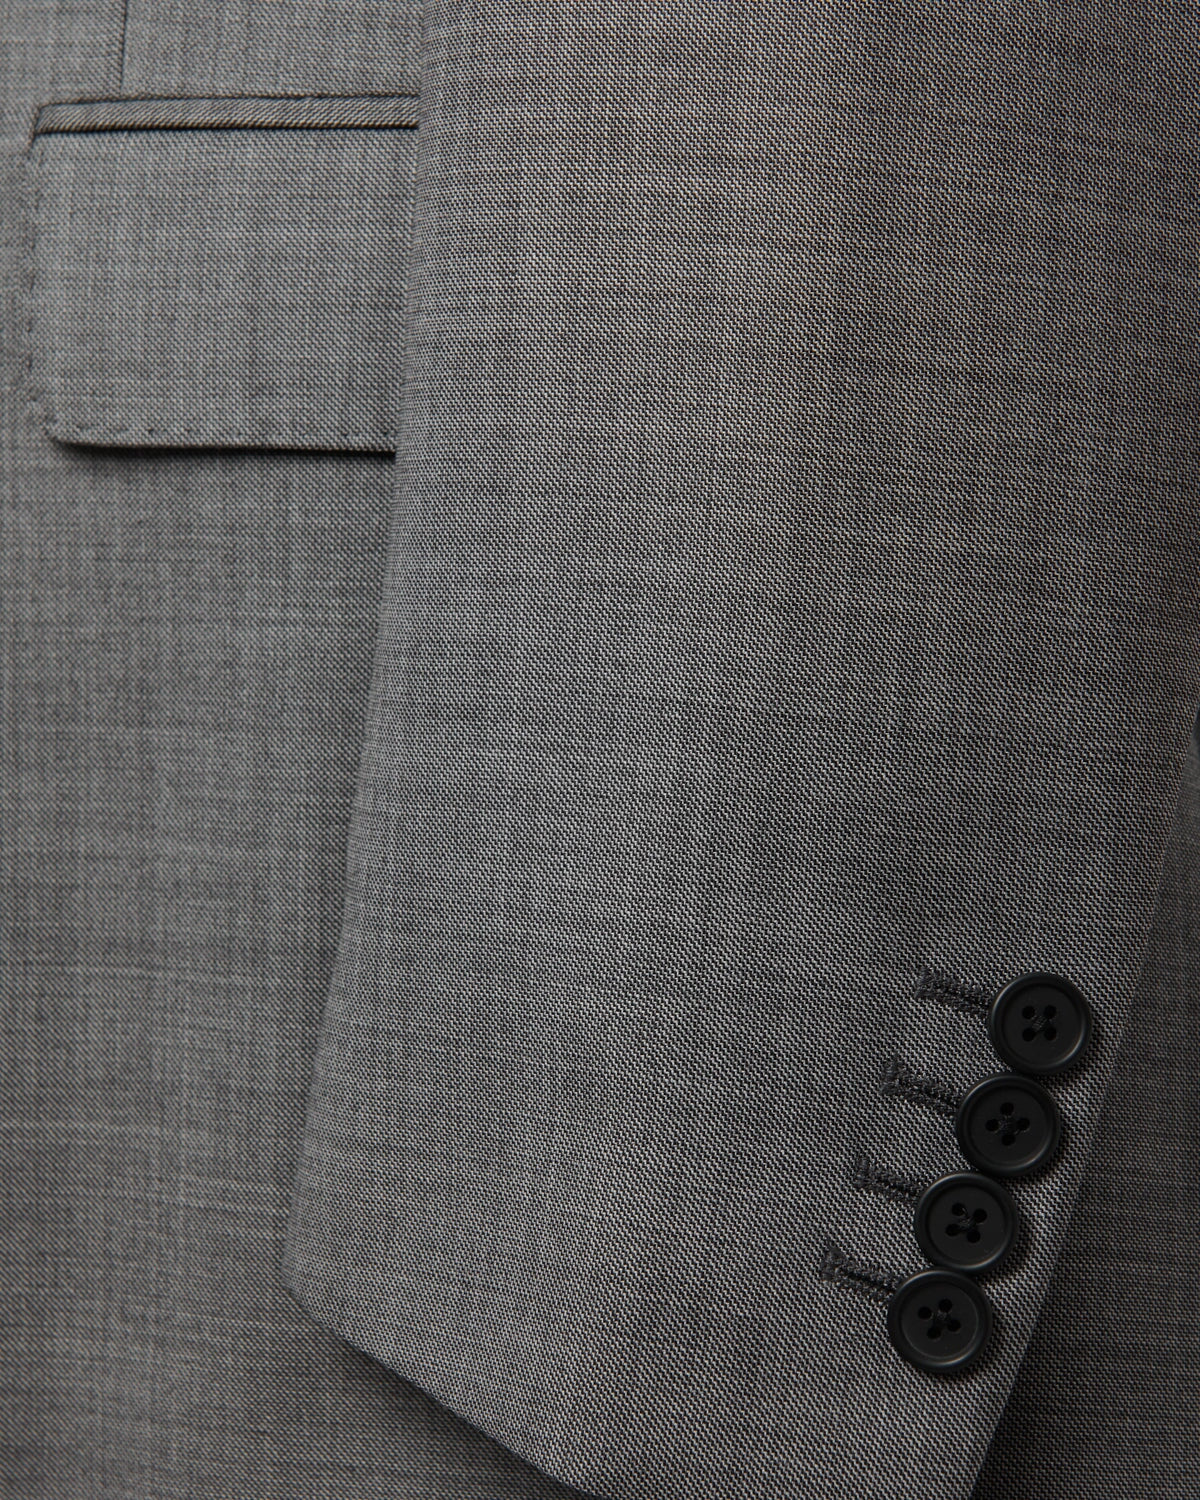 Kilgour Savile Row Tailoring SB1 KG Single Breasted Lt Grey Suit